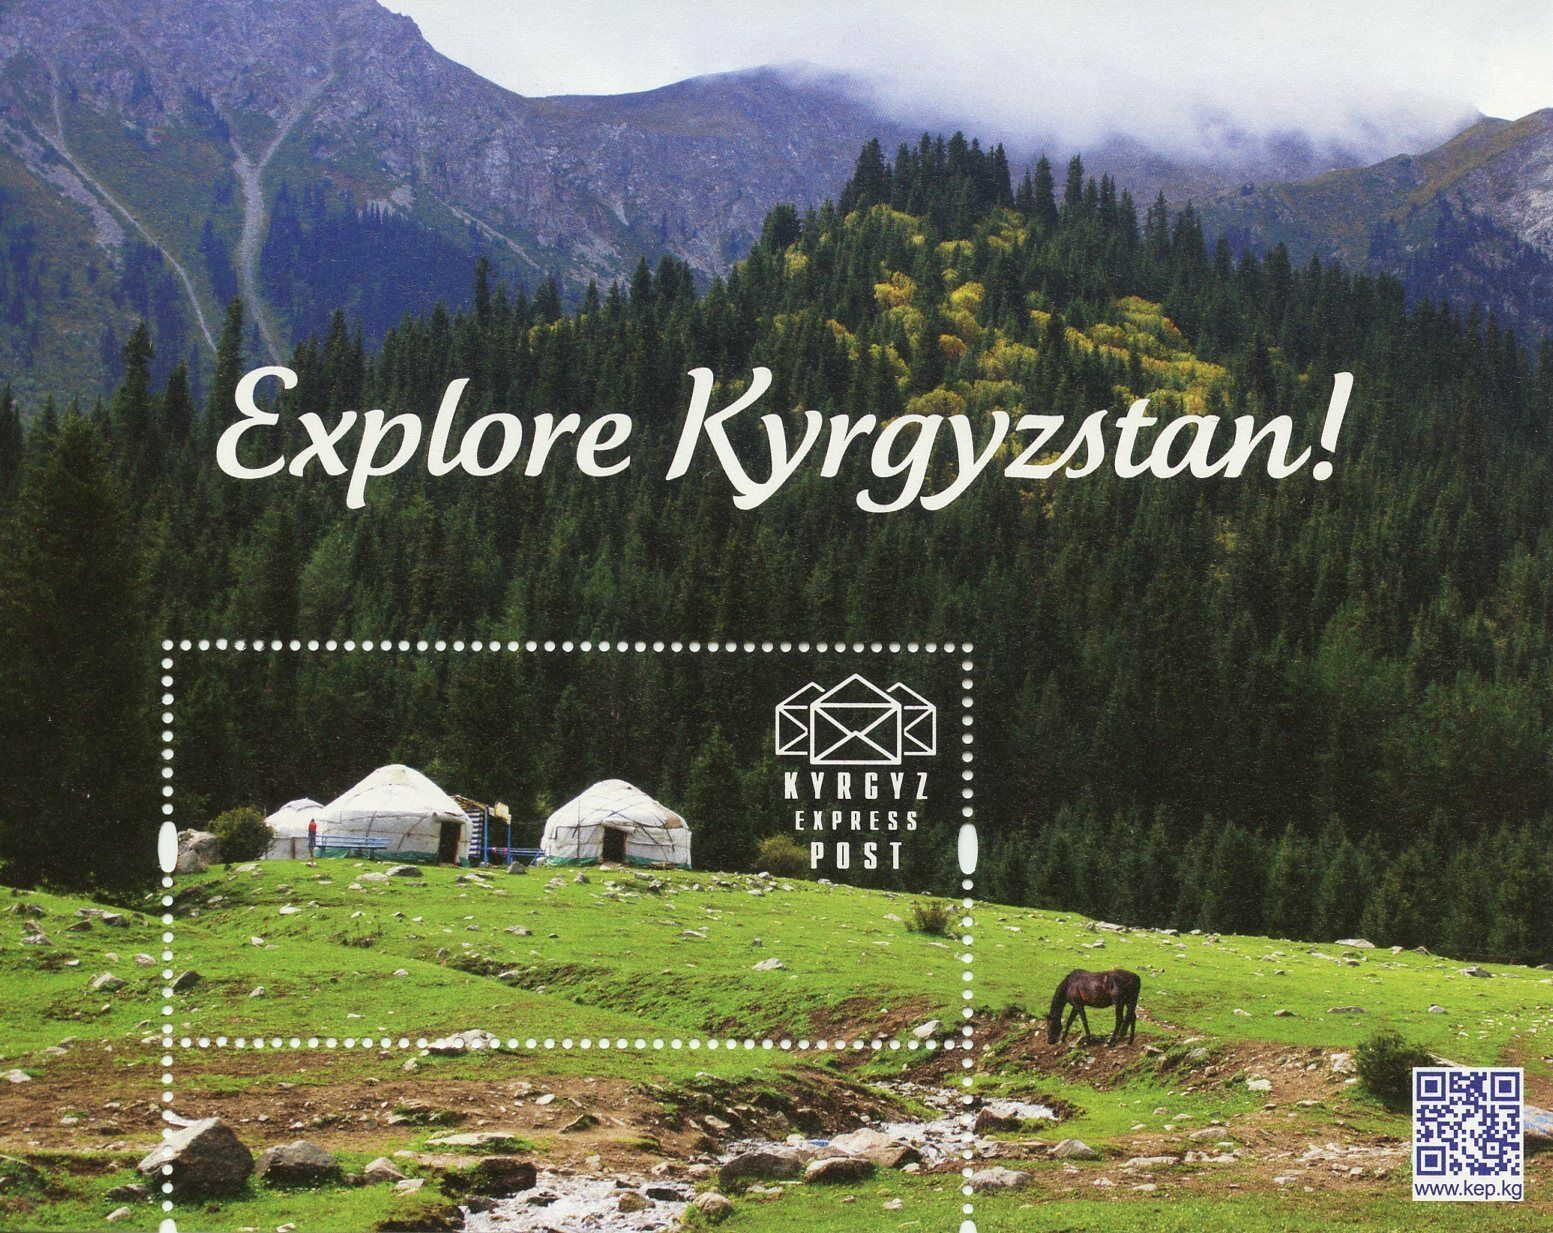 Kyrgyz Express Post KEP Explore Kyrgyzstan Promotional Stamp M/S Horses Yurts